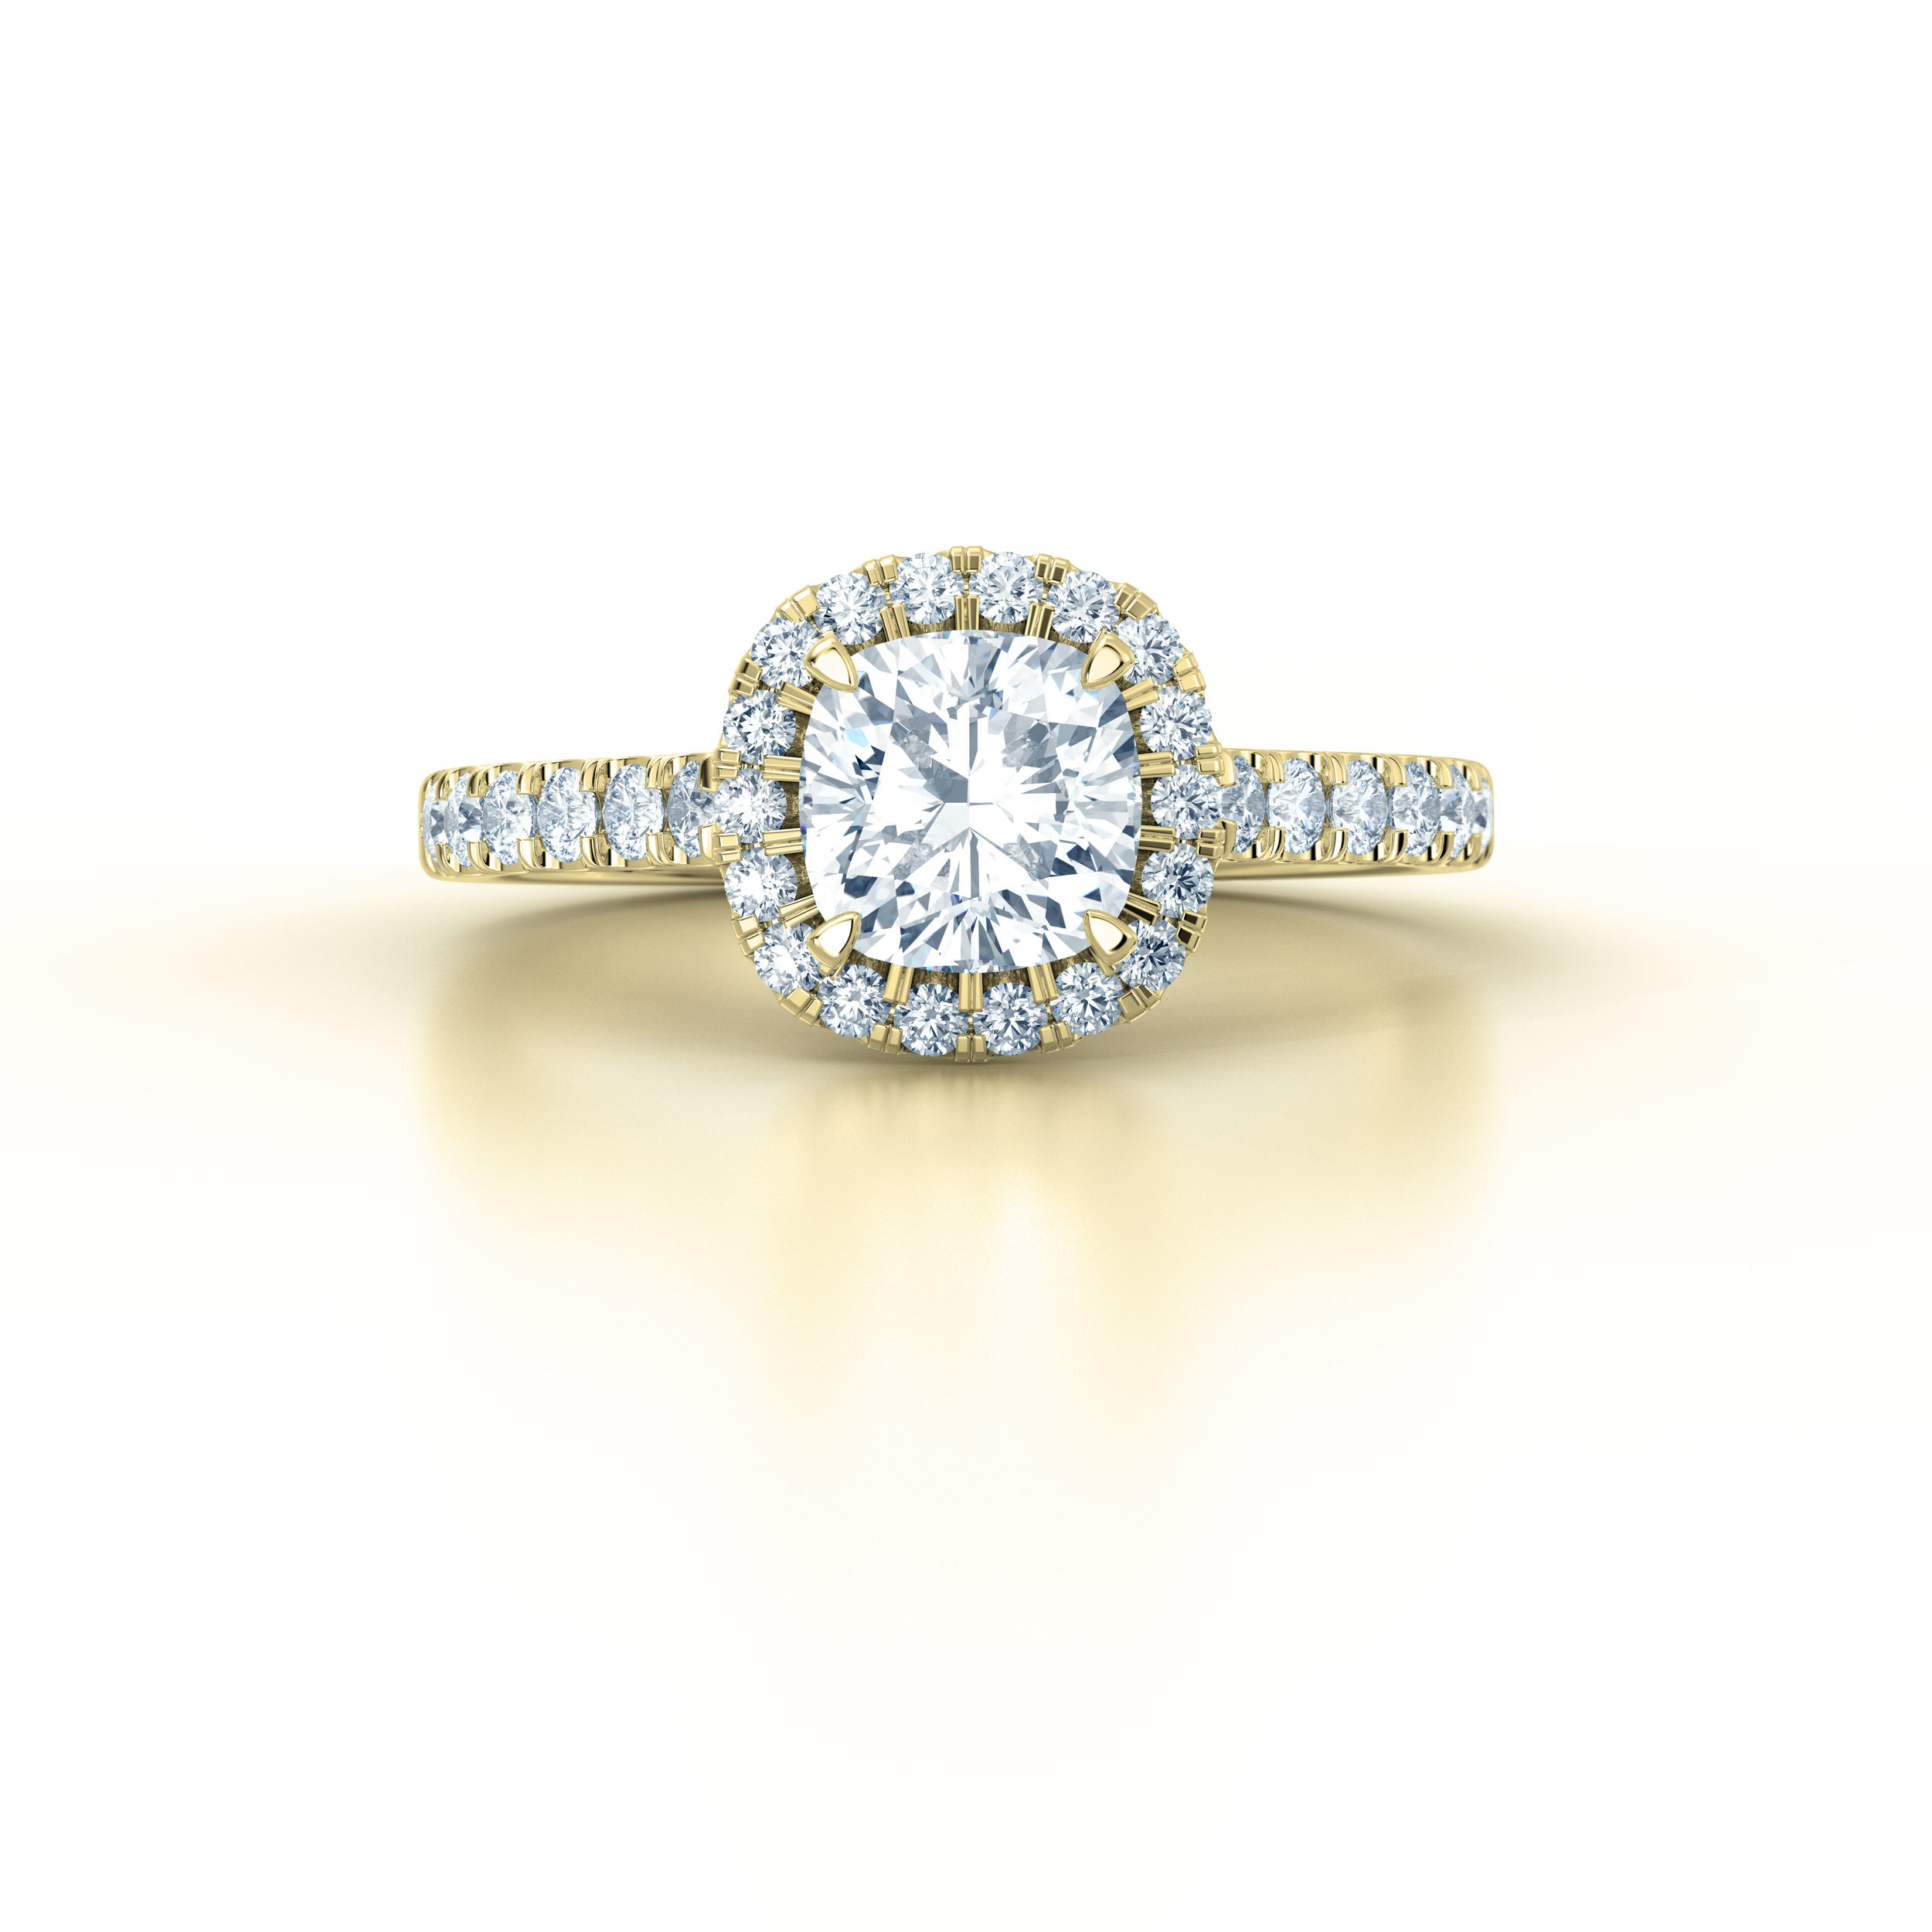 Cushion cut diamond halo engagement ring